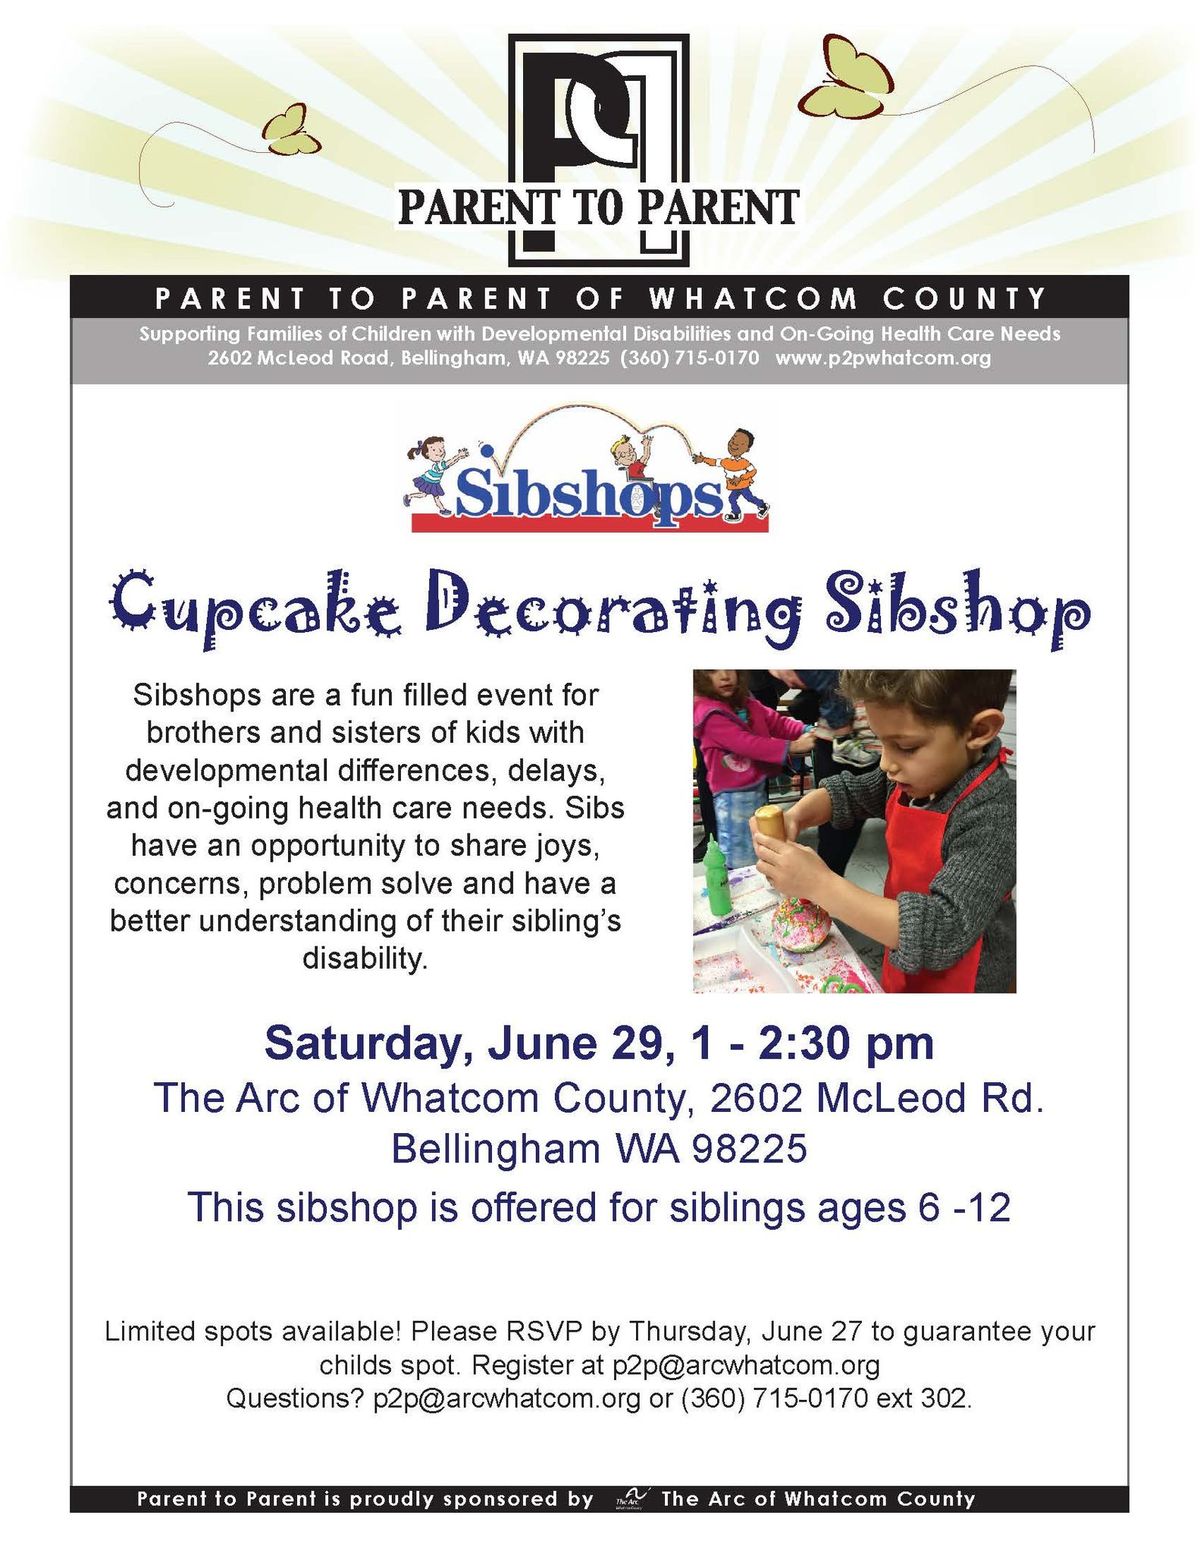 Cupcake Decorating Sibshop